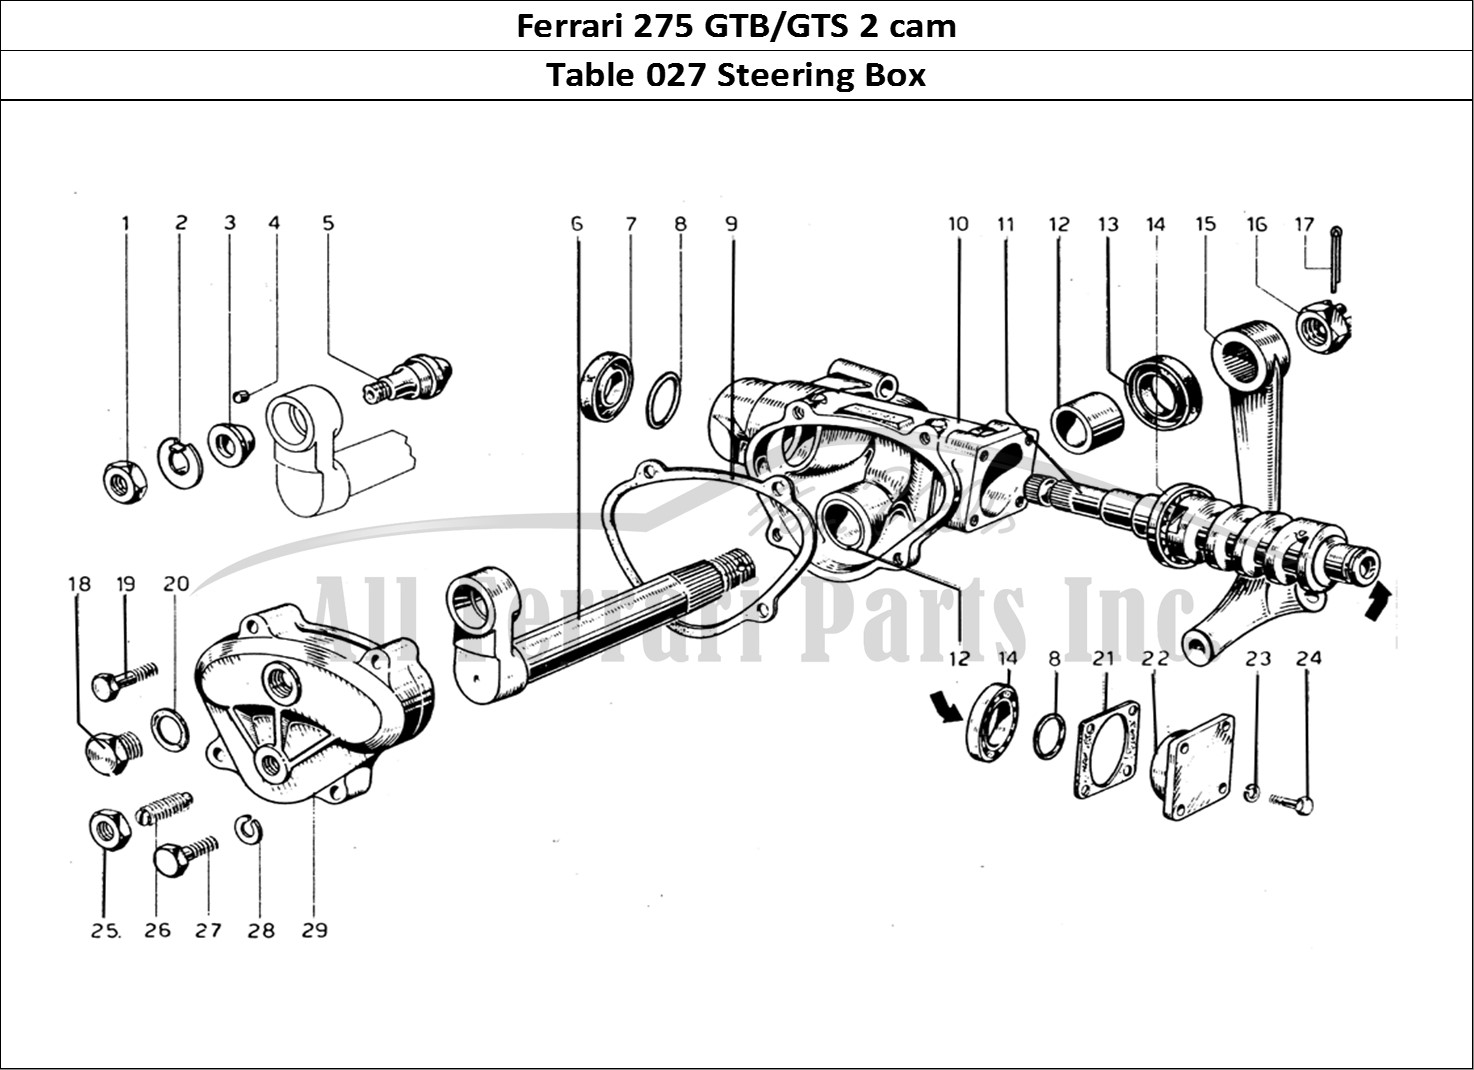 Ferrari Parts Ferrari 275 GTB/GTS 2 cam Page 027 Steering Box